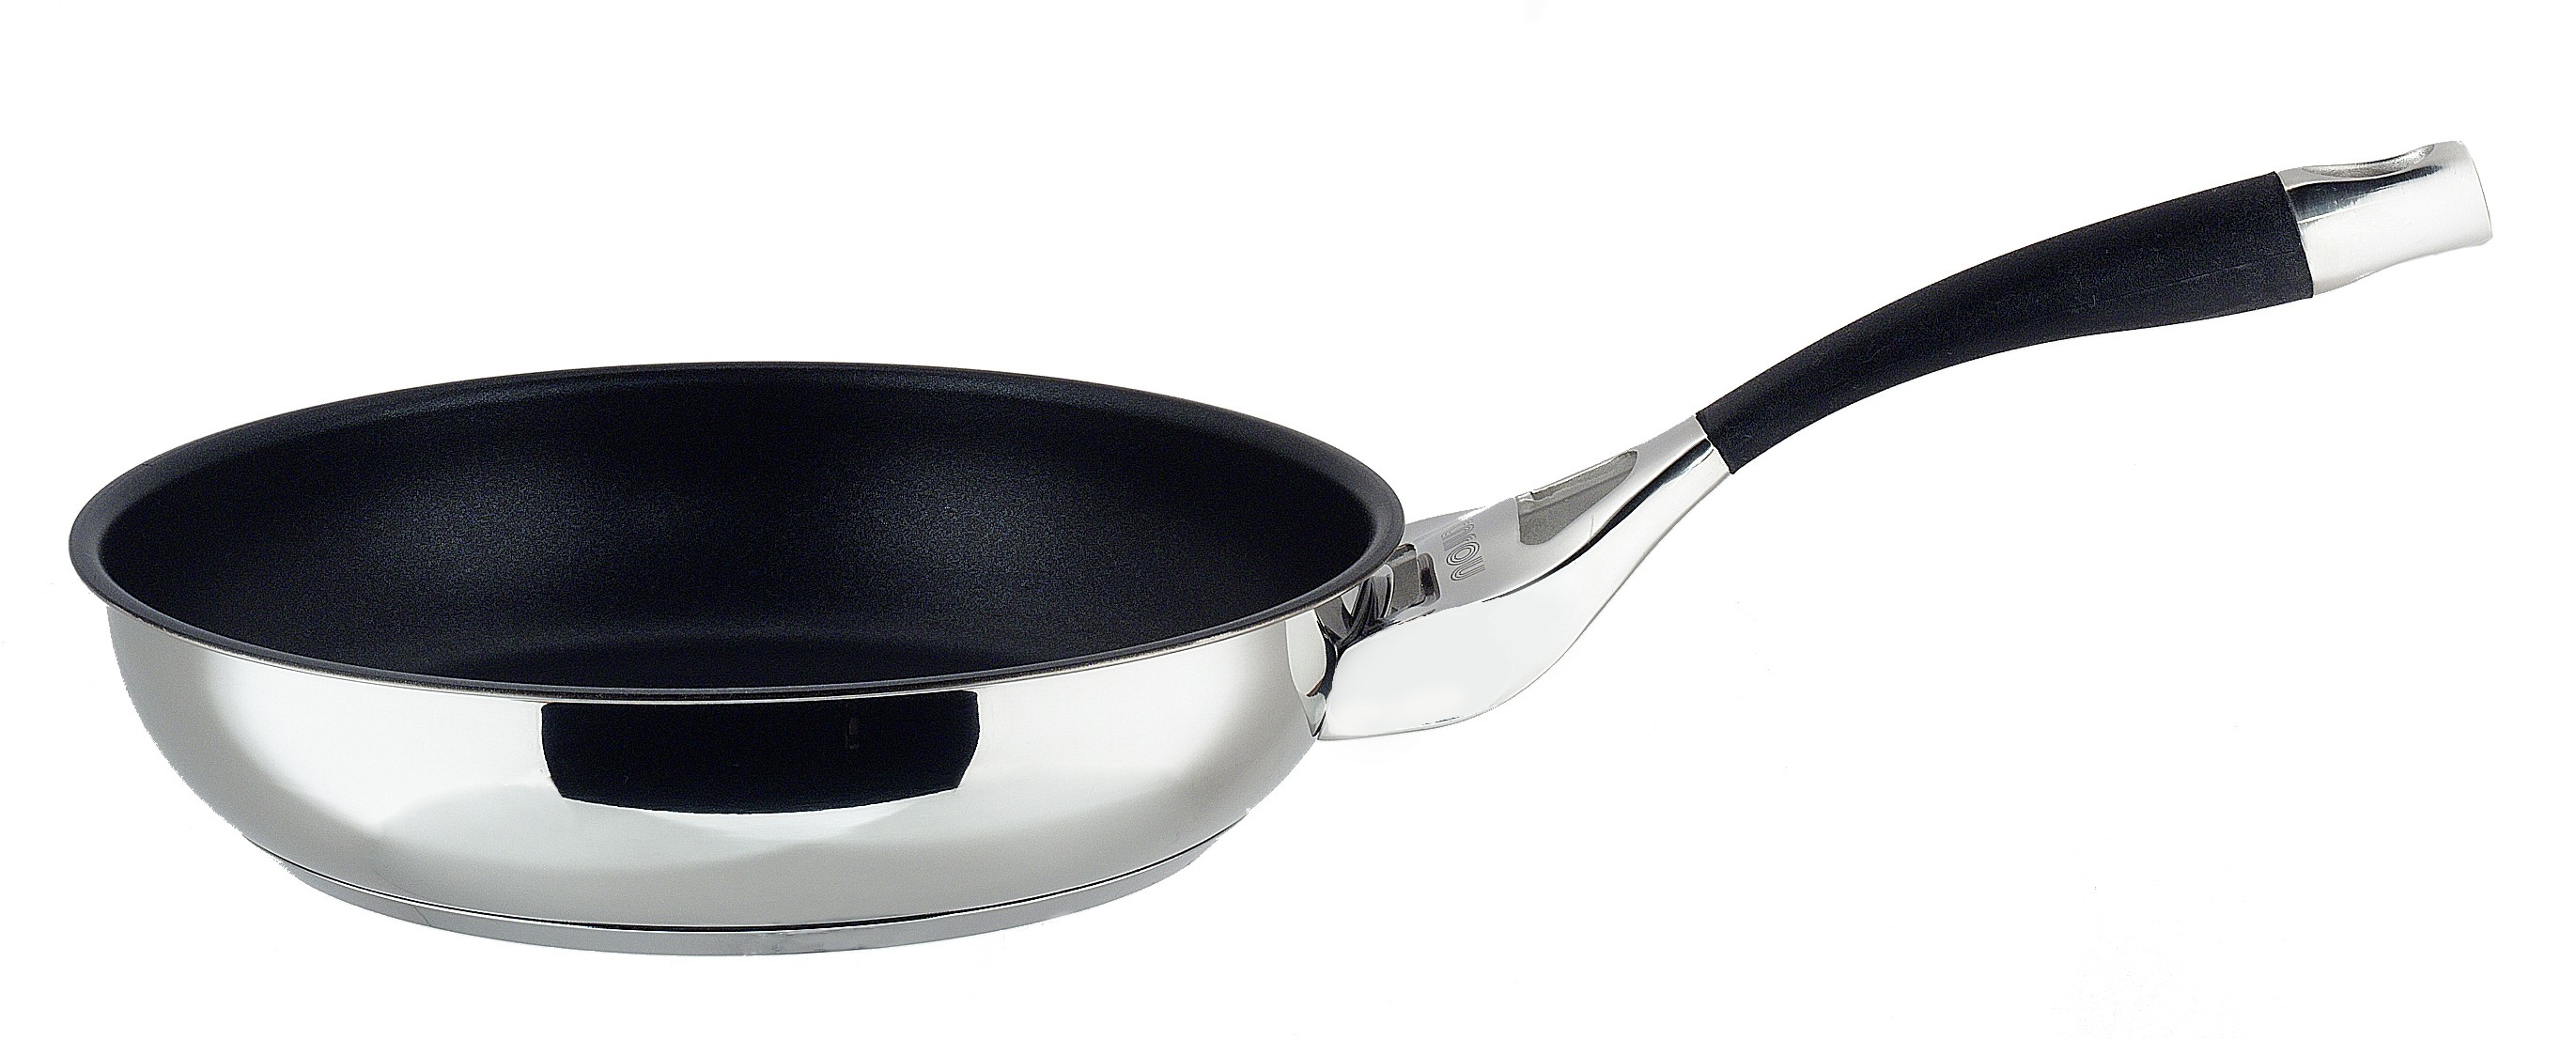 Circulon Steel Elite 24cm skillet / frying pan